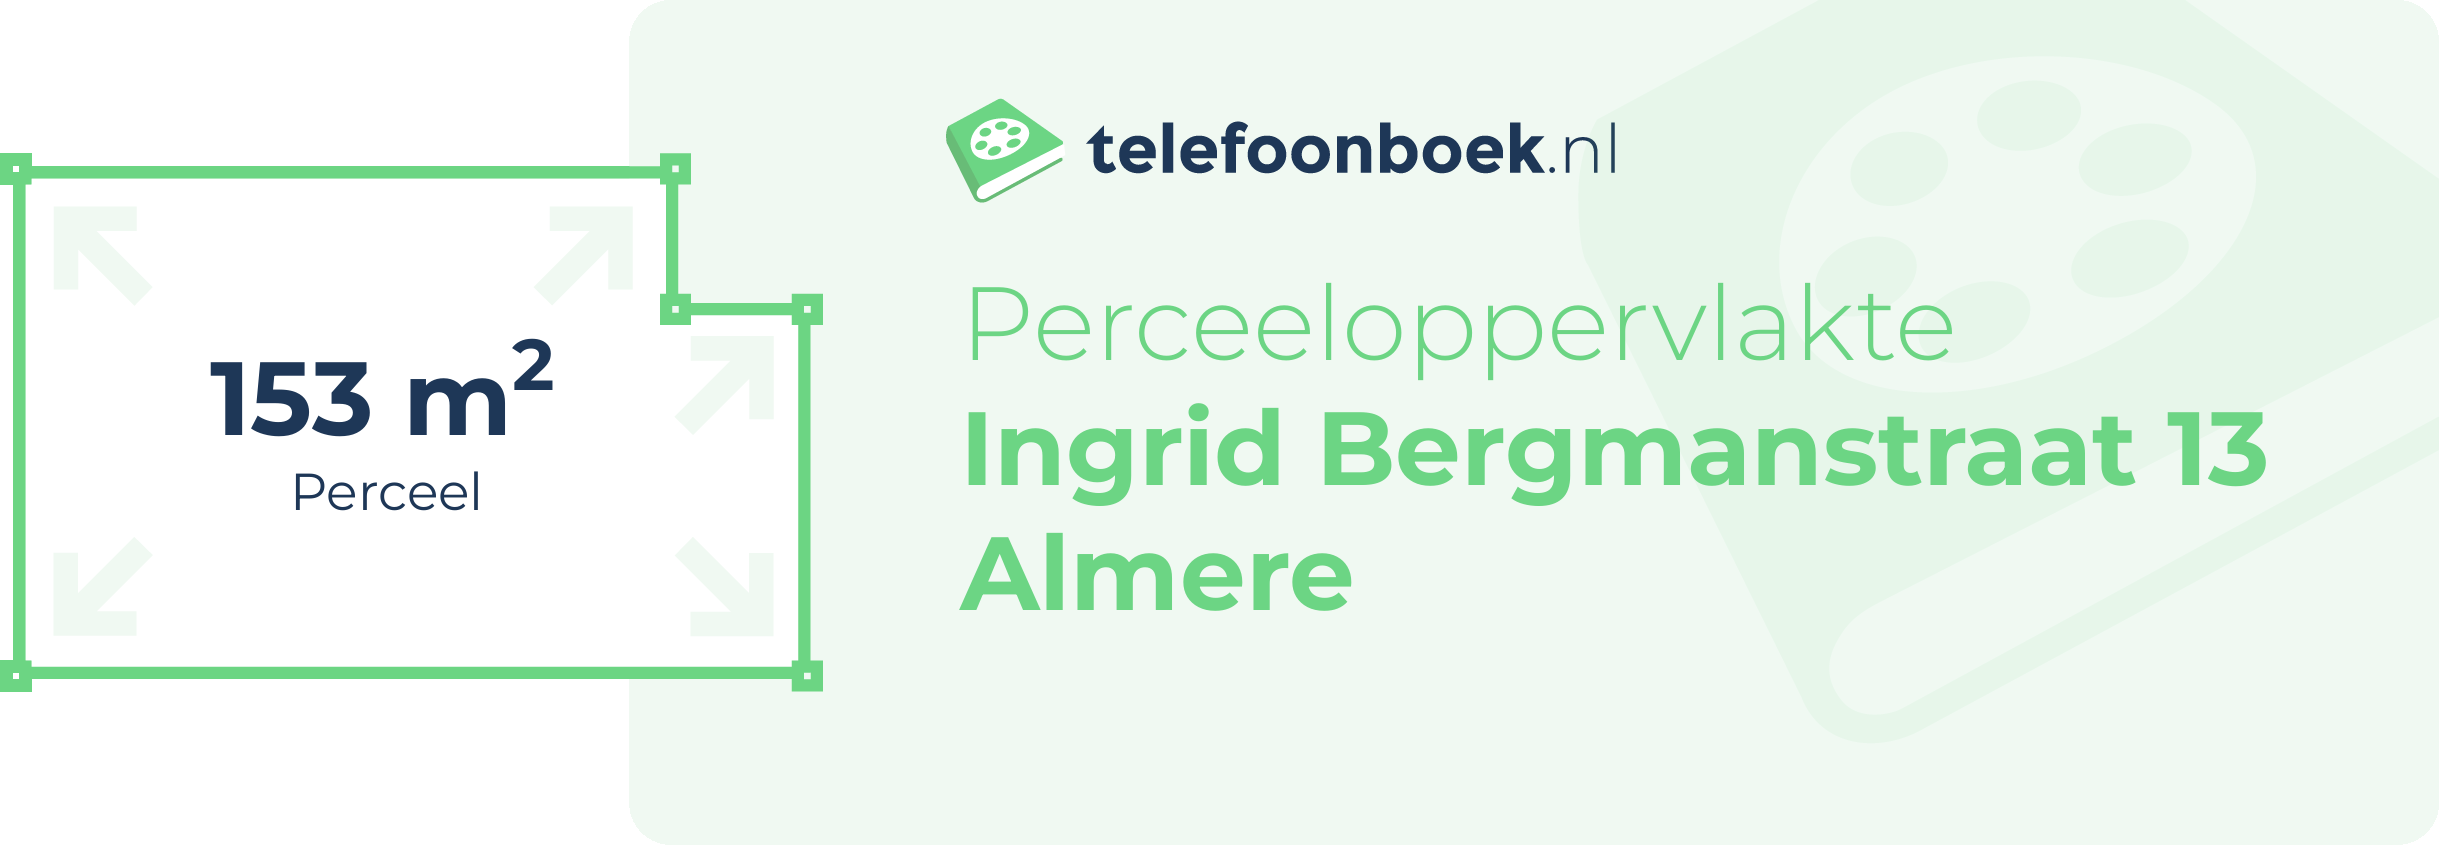 Perceeloppervlakte Ingrid Bergmanstraat 13 Almere